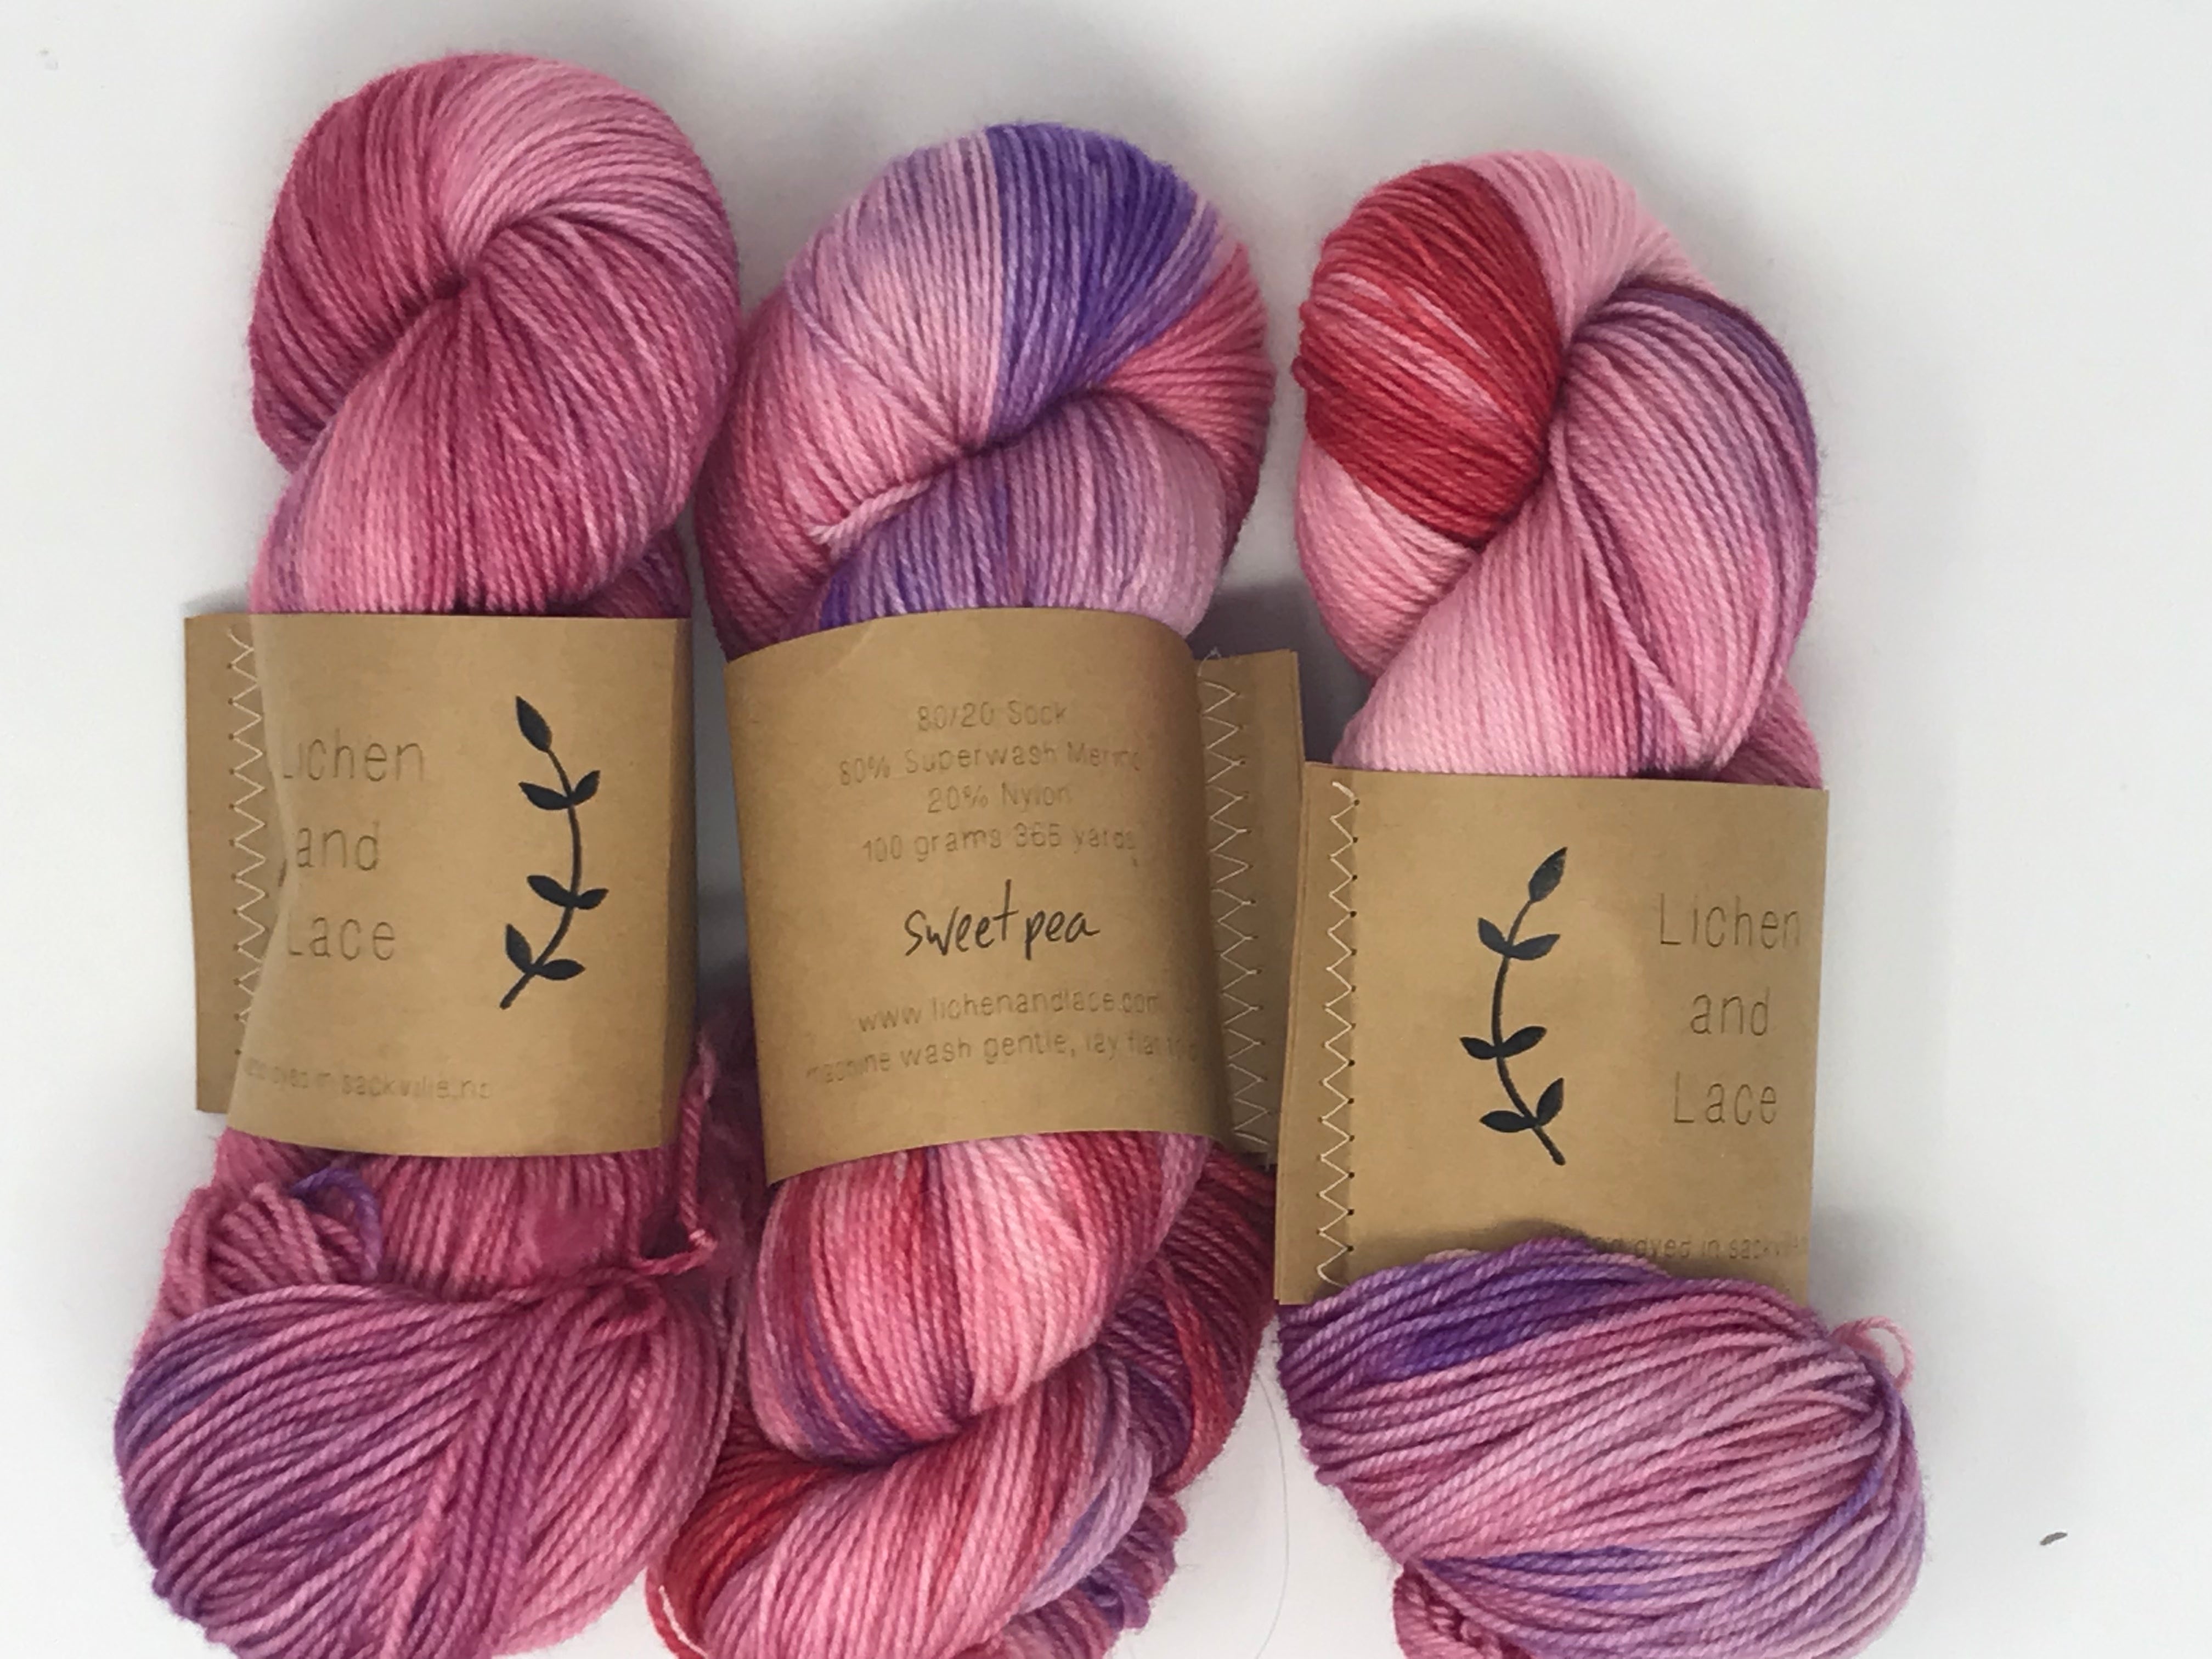 Lichen and Lace 80-20 Sock – Riverside Yarns